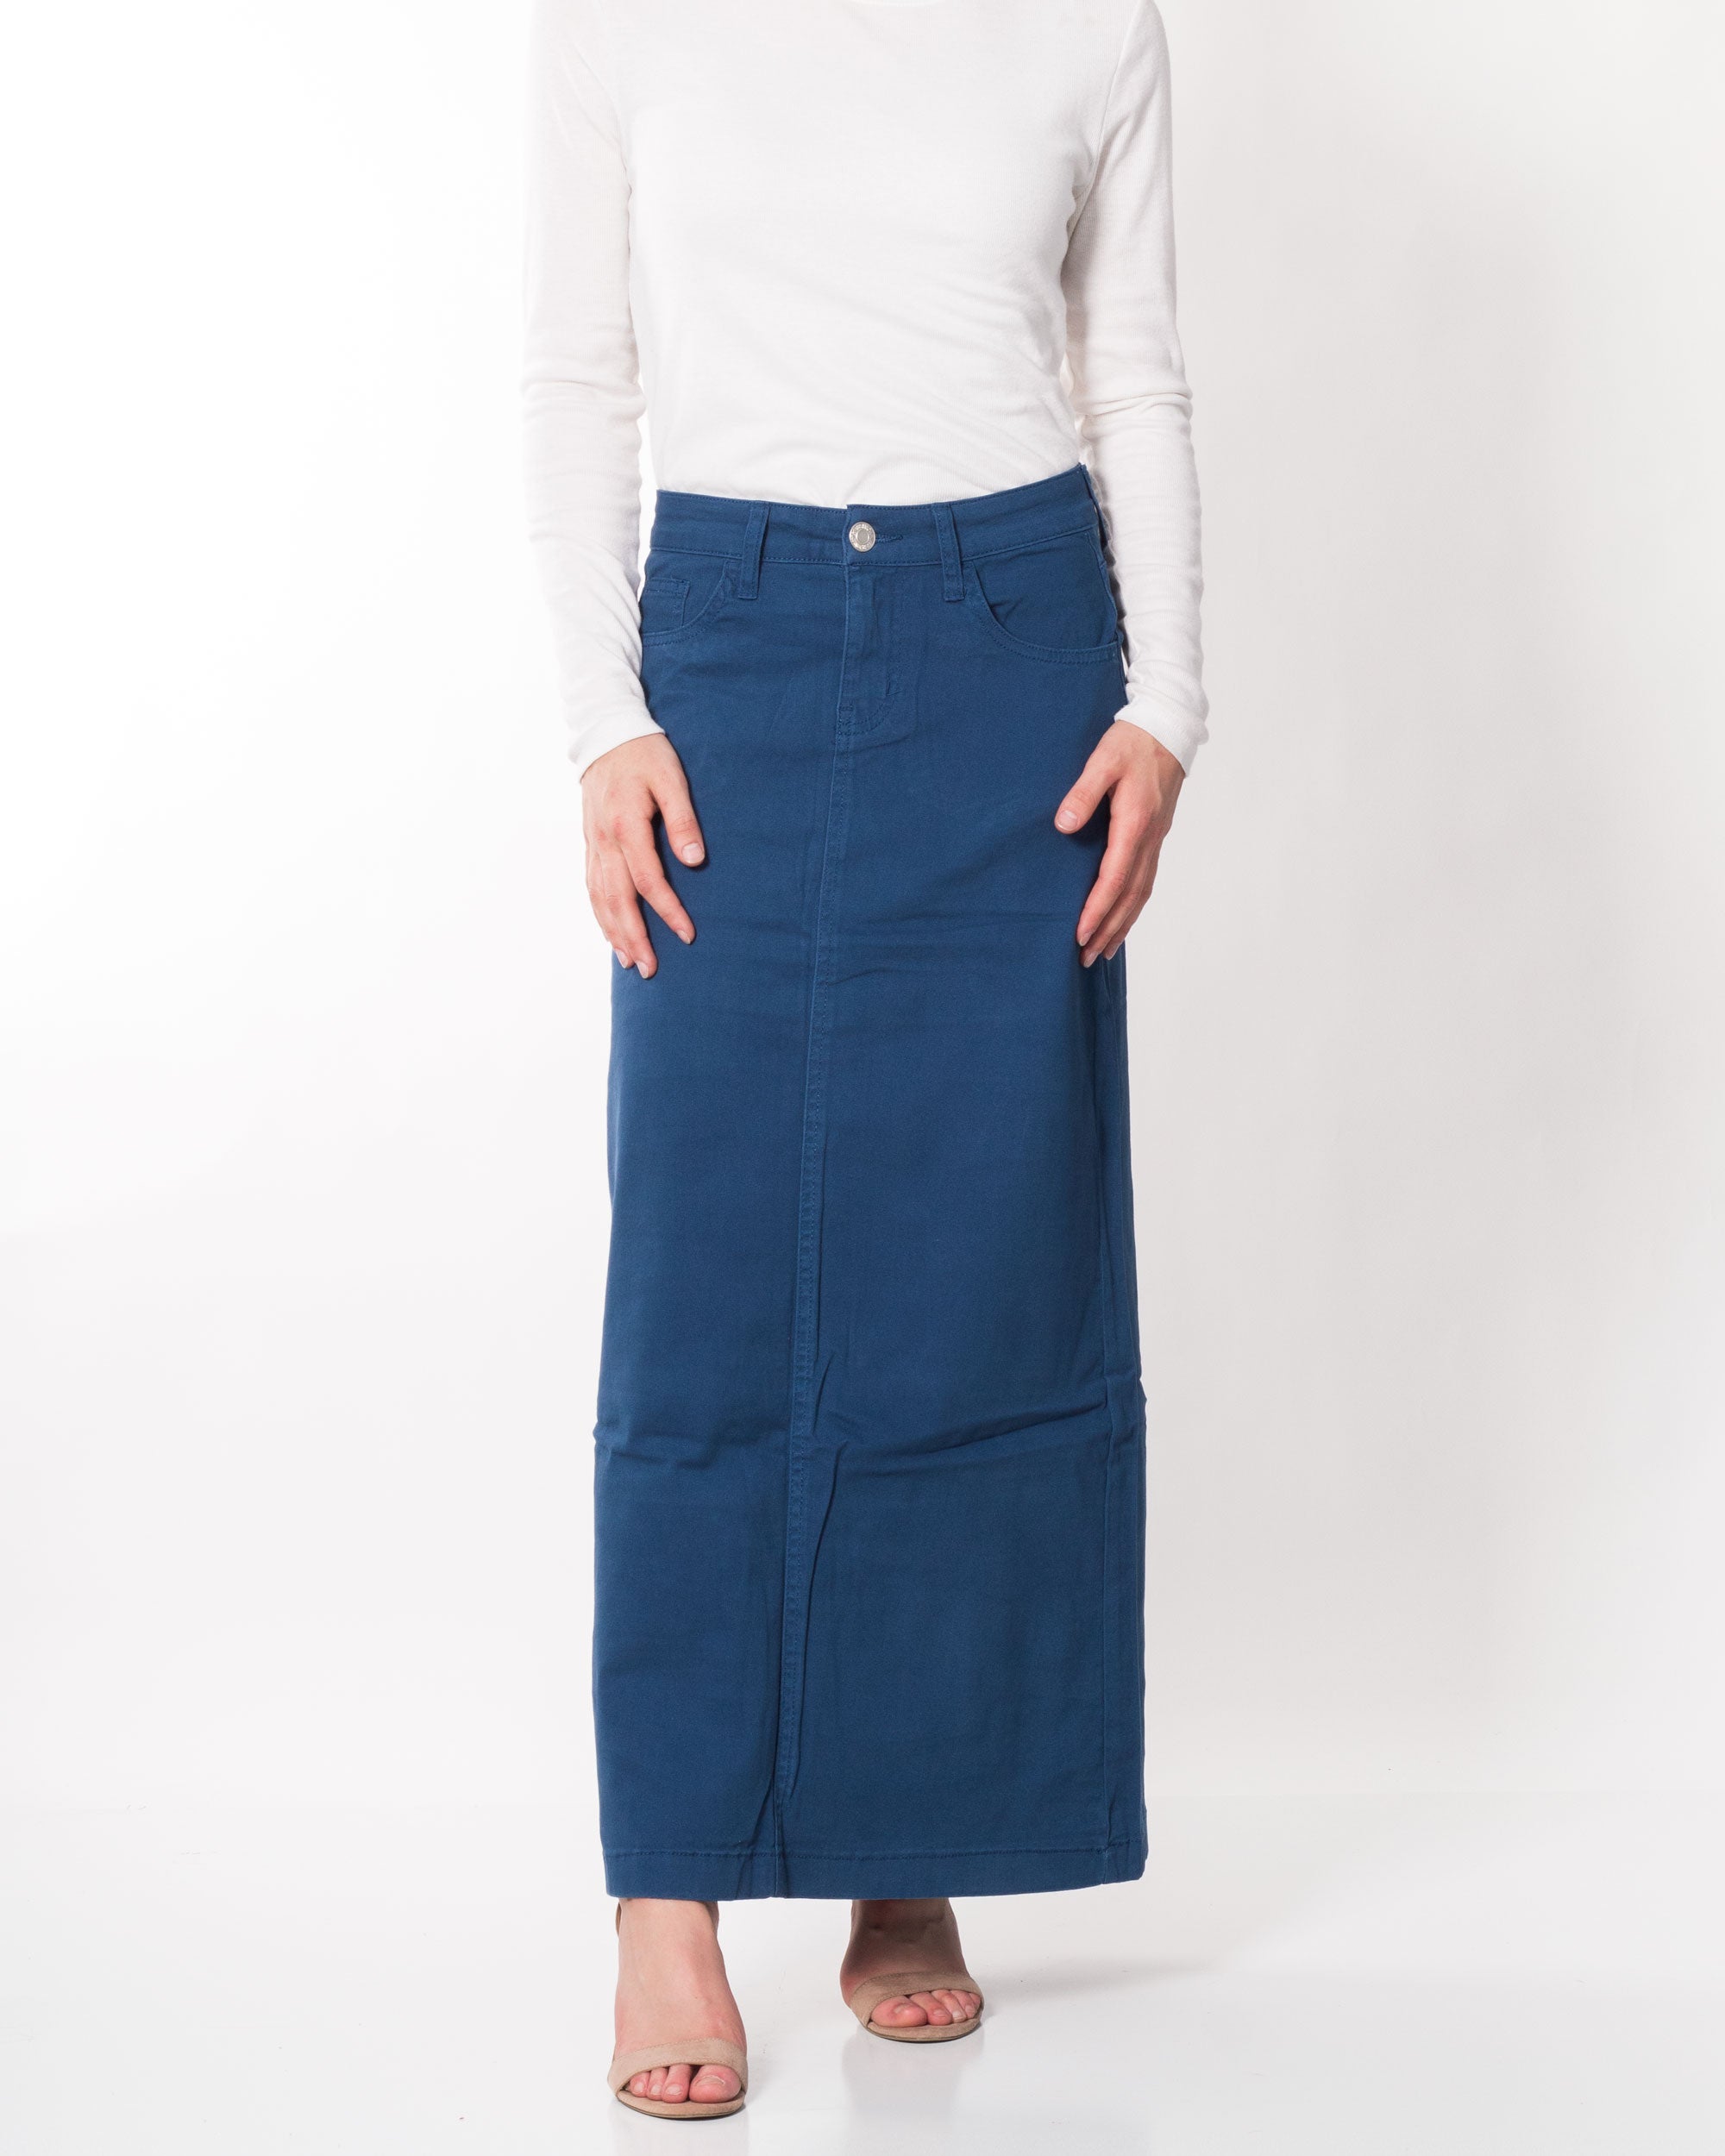 Sydney's Maxi Denim Skirt